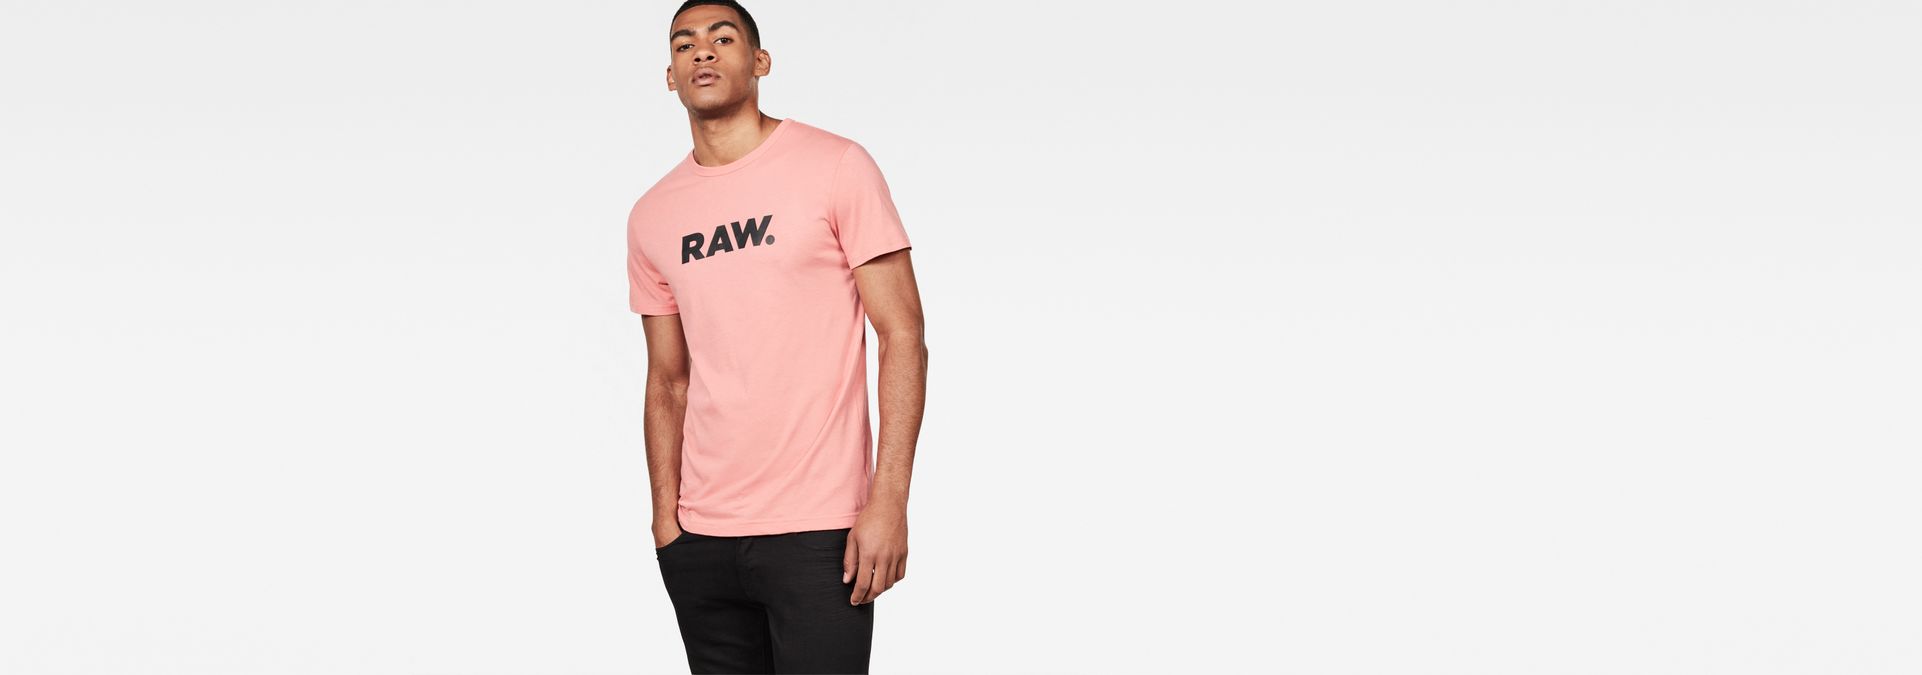 g star raw pink shirt